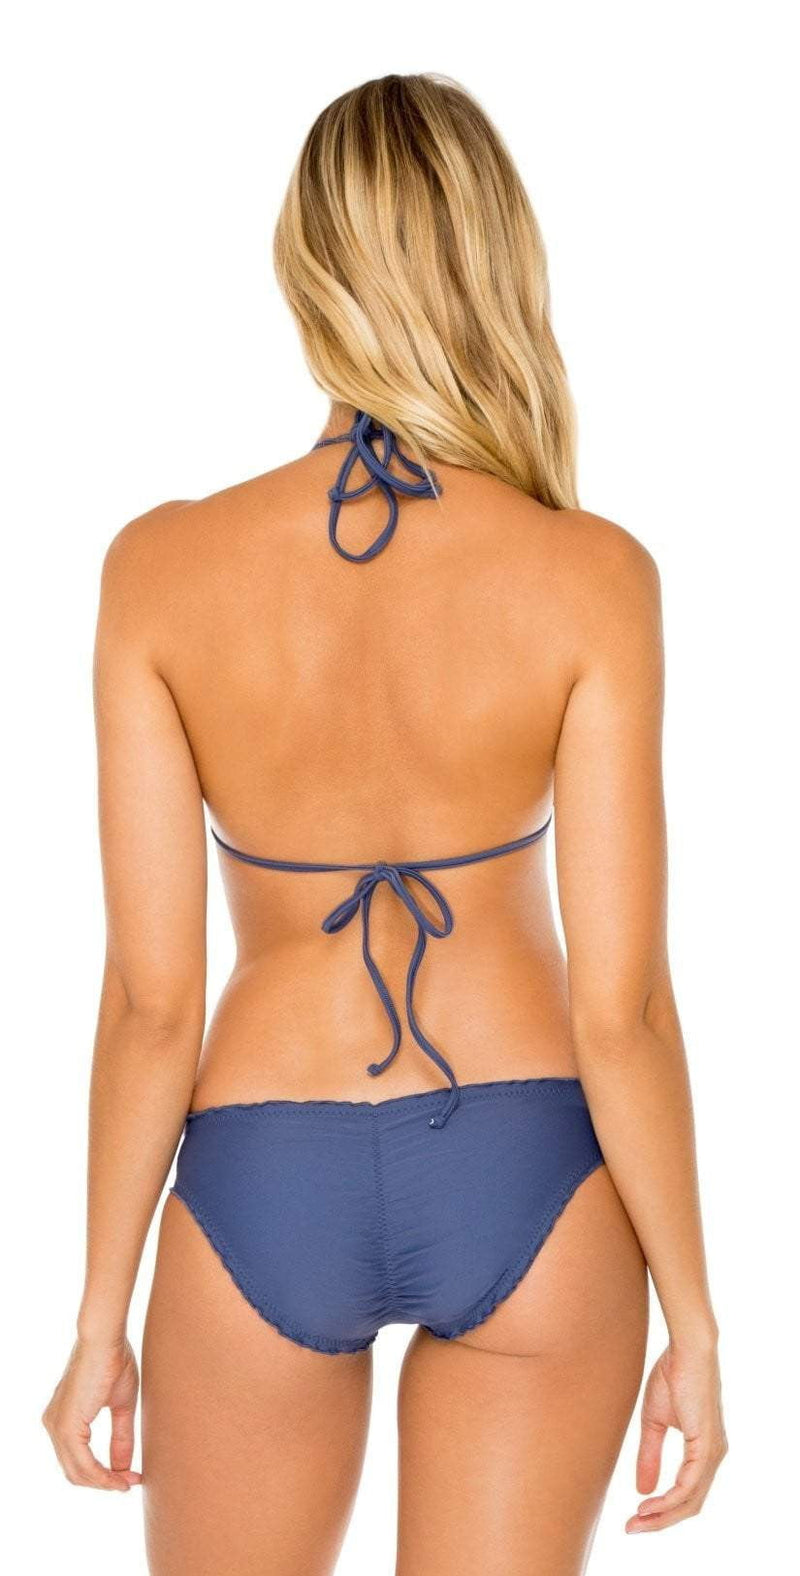 Luli Fama Women's Cosita Buena Molded Push-Up Halter Bikini Top - ShopStyle  Two Piece Swimsuits